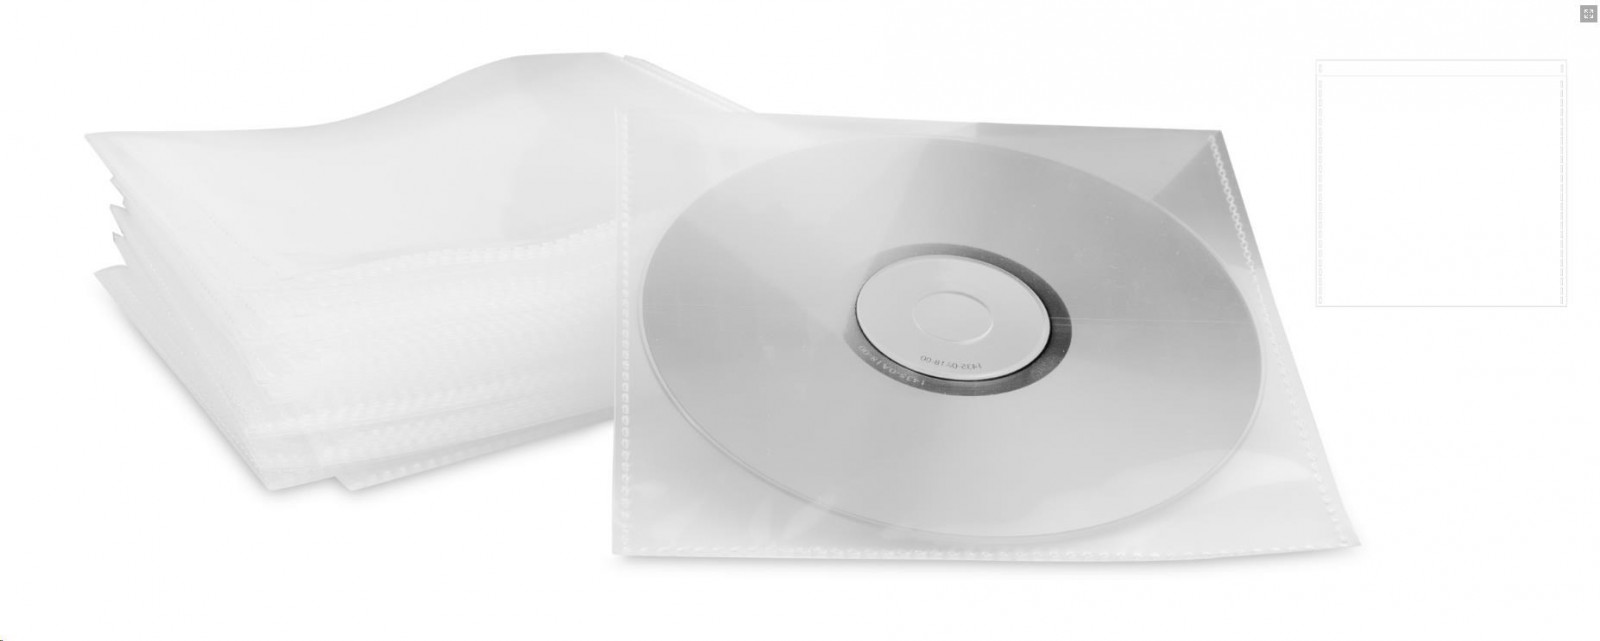 OEM obálka plast transparent na 1 CD (balenie 100ks)